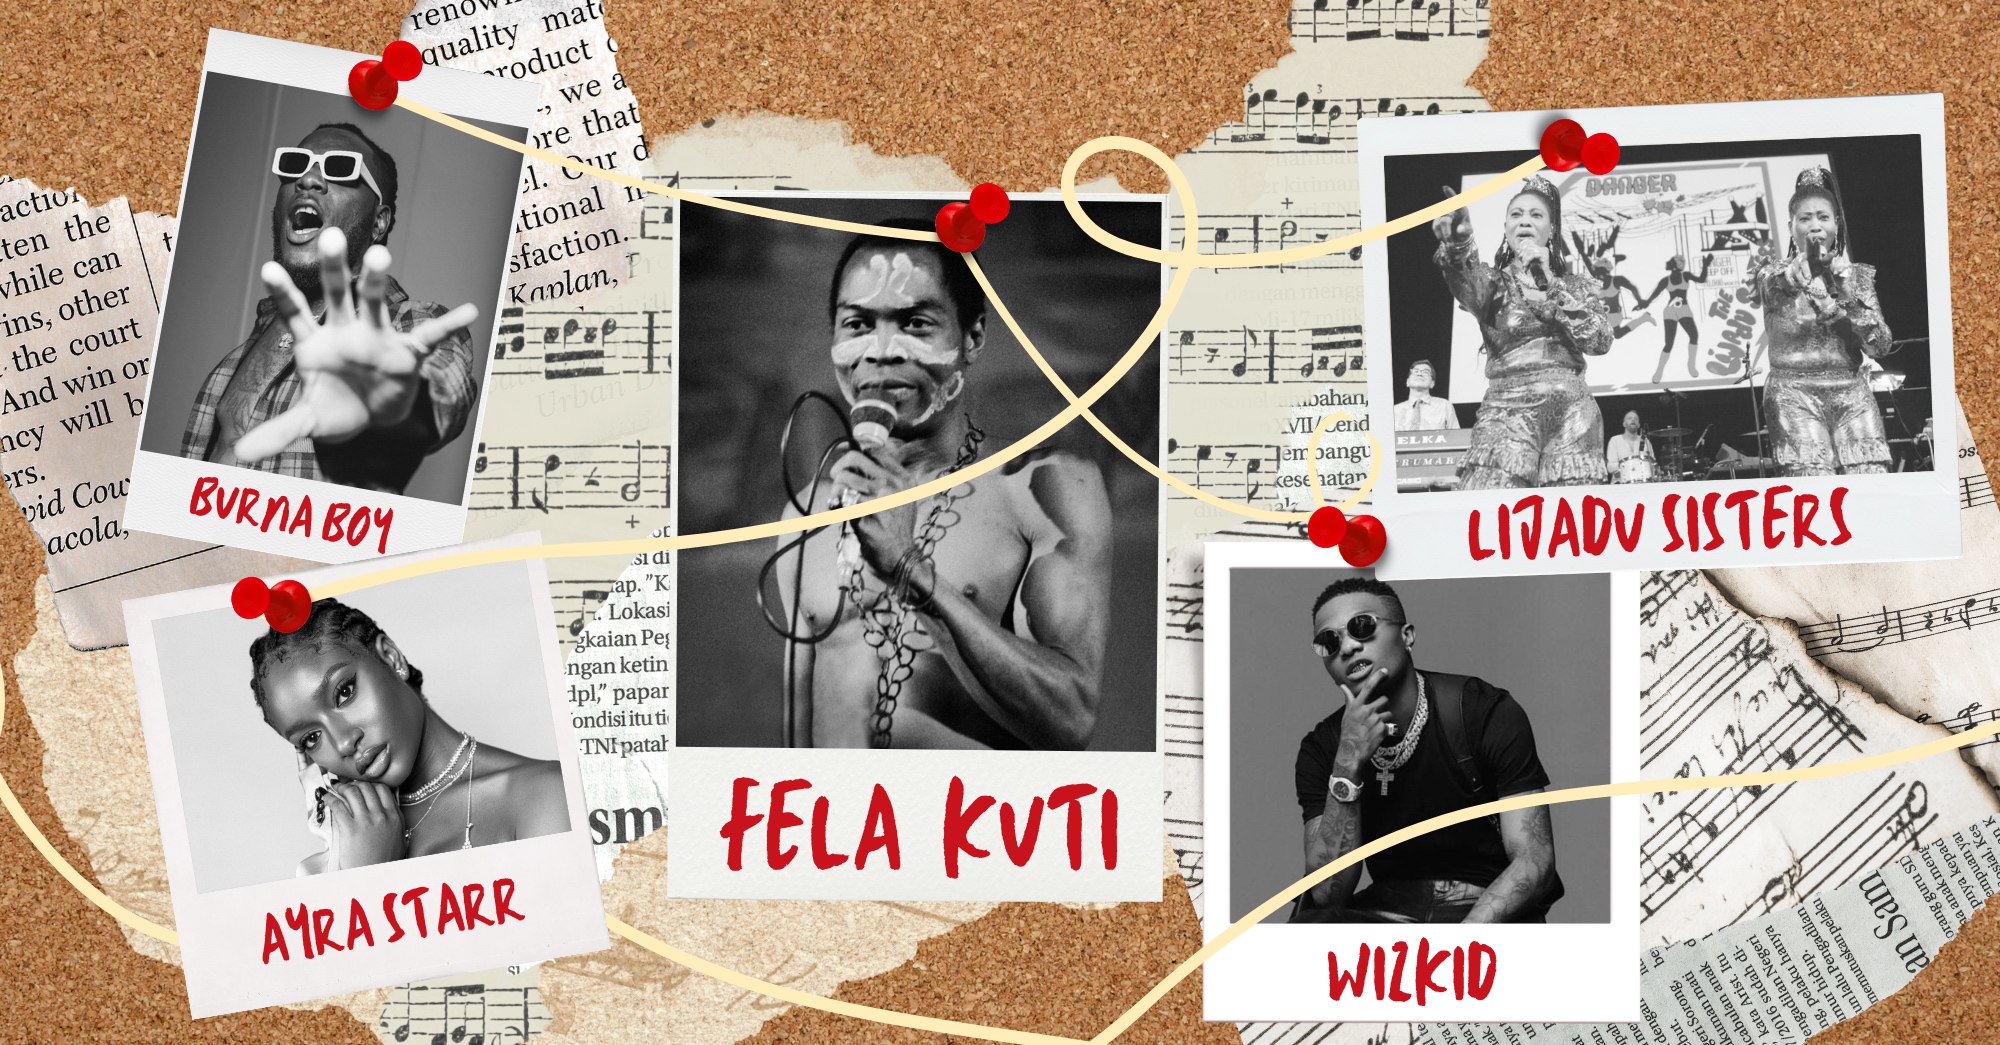 Beyond Afrobeat: Kokoroko's World of Black Music article @ All About Jazz